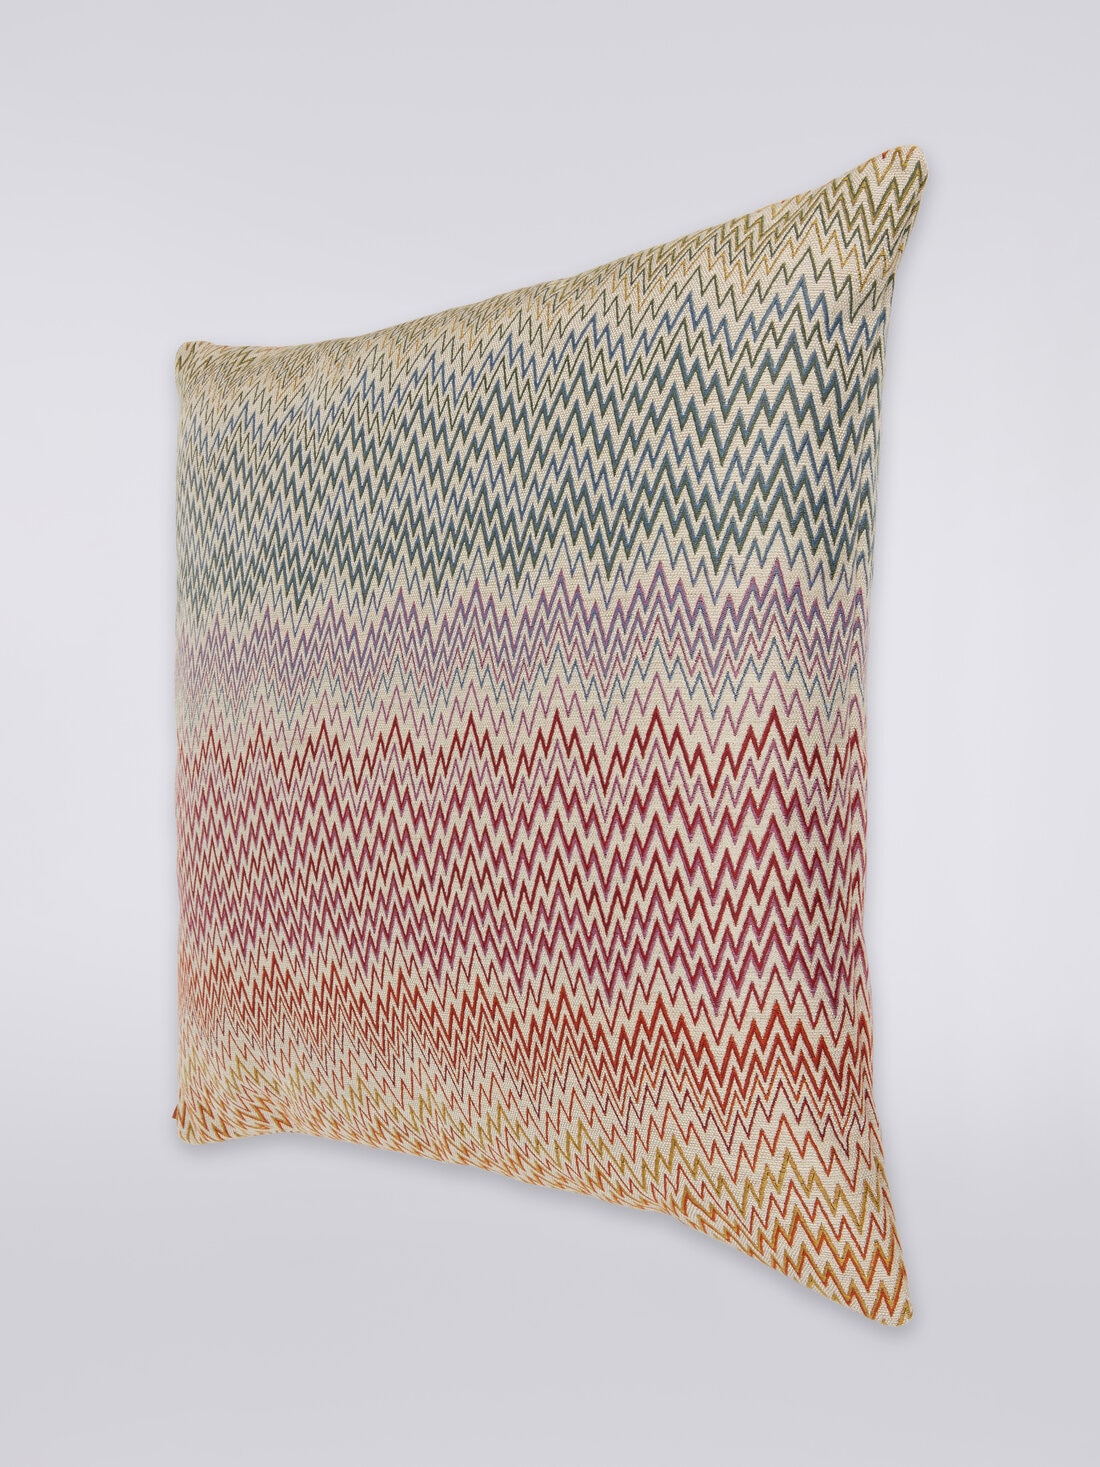 Arras cushion 60x60 cm, Multicoloured  - 8051275499817 - 1